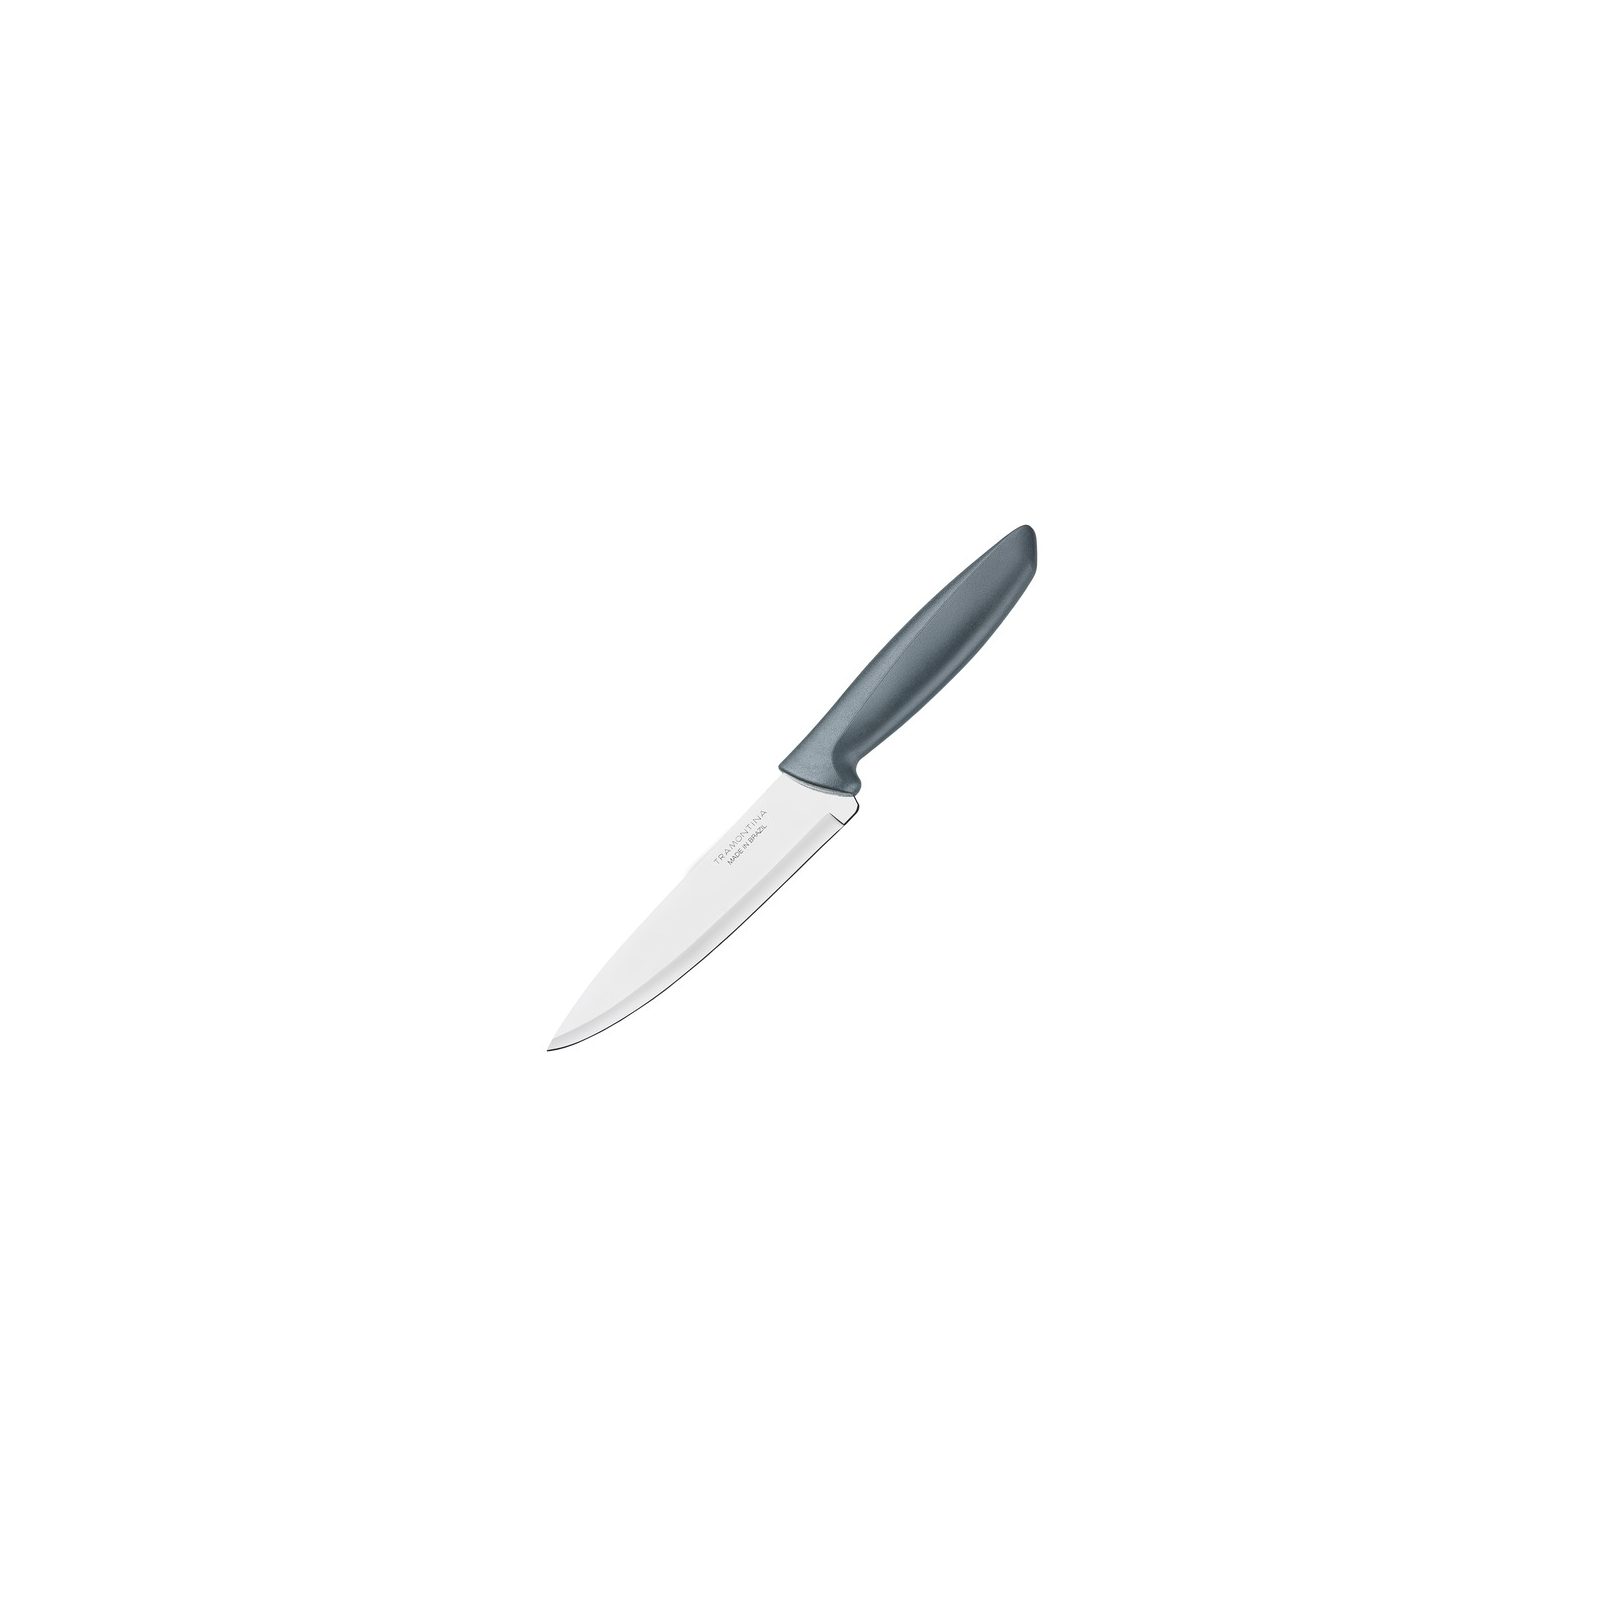 Кухонный нож Tramontina Plenus Шеф 178 мм Gray (23426/167)